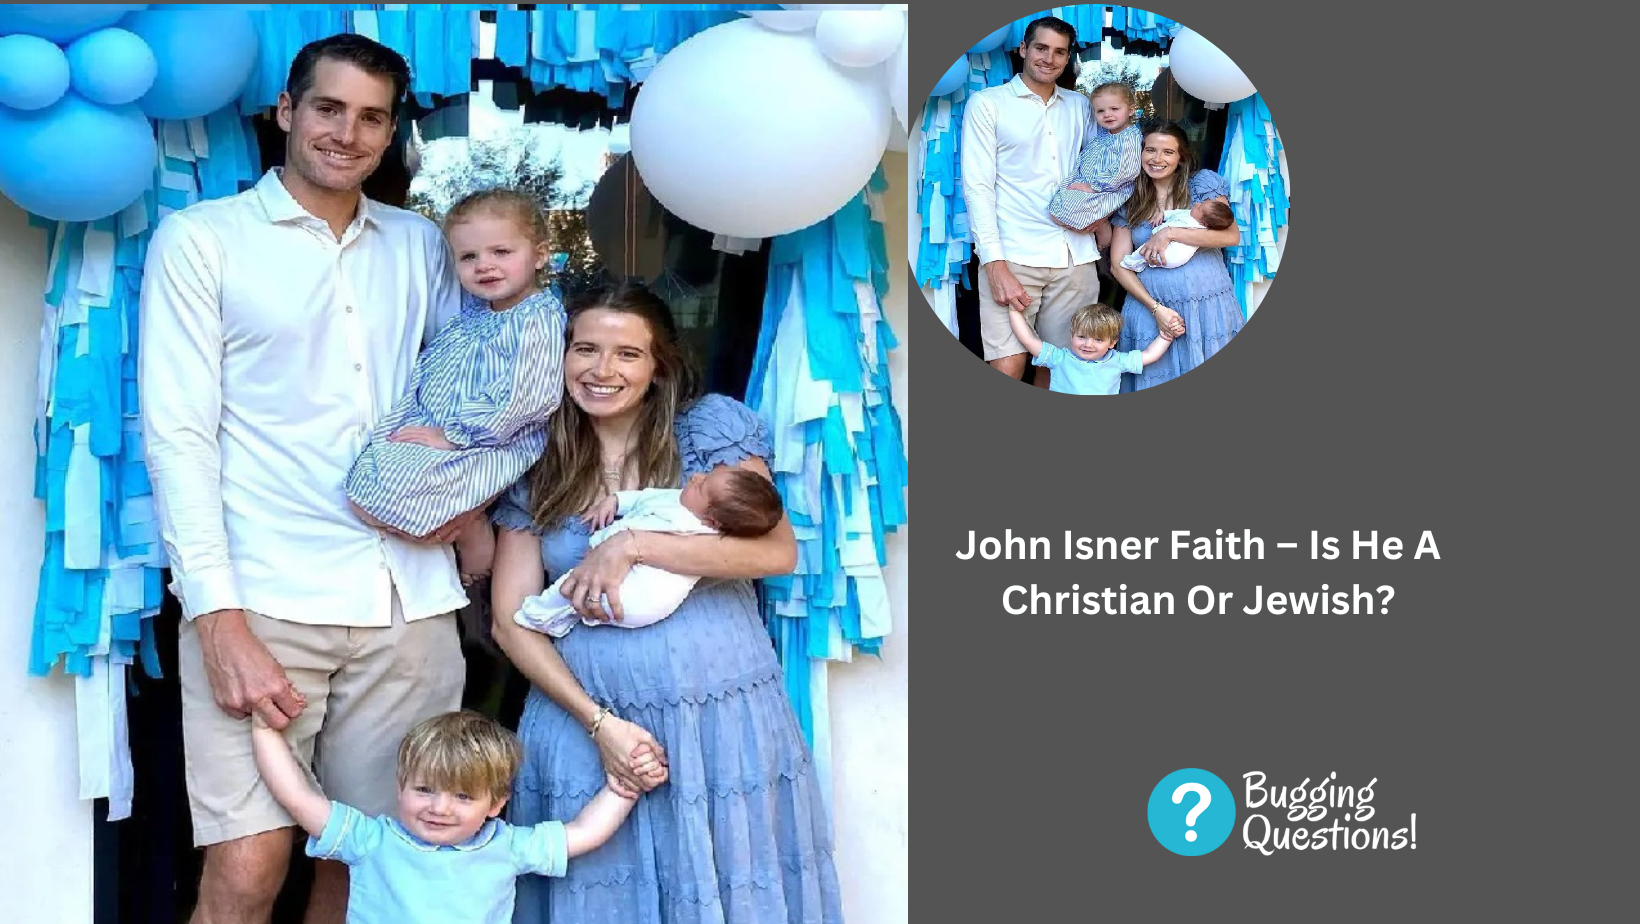 John Isner Faith – Is He A Christian Or Jewish?